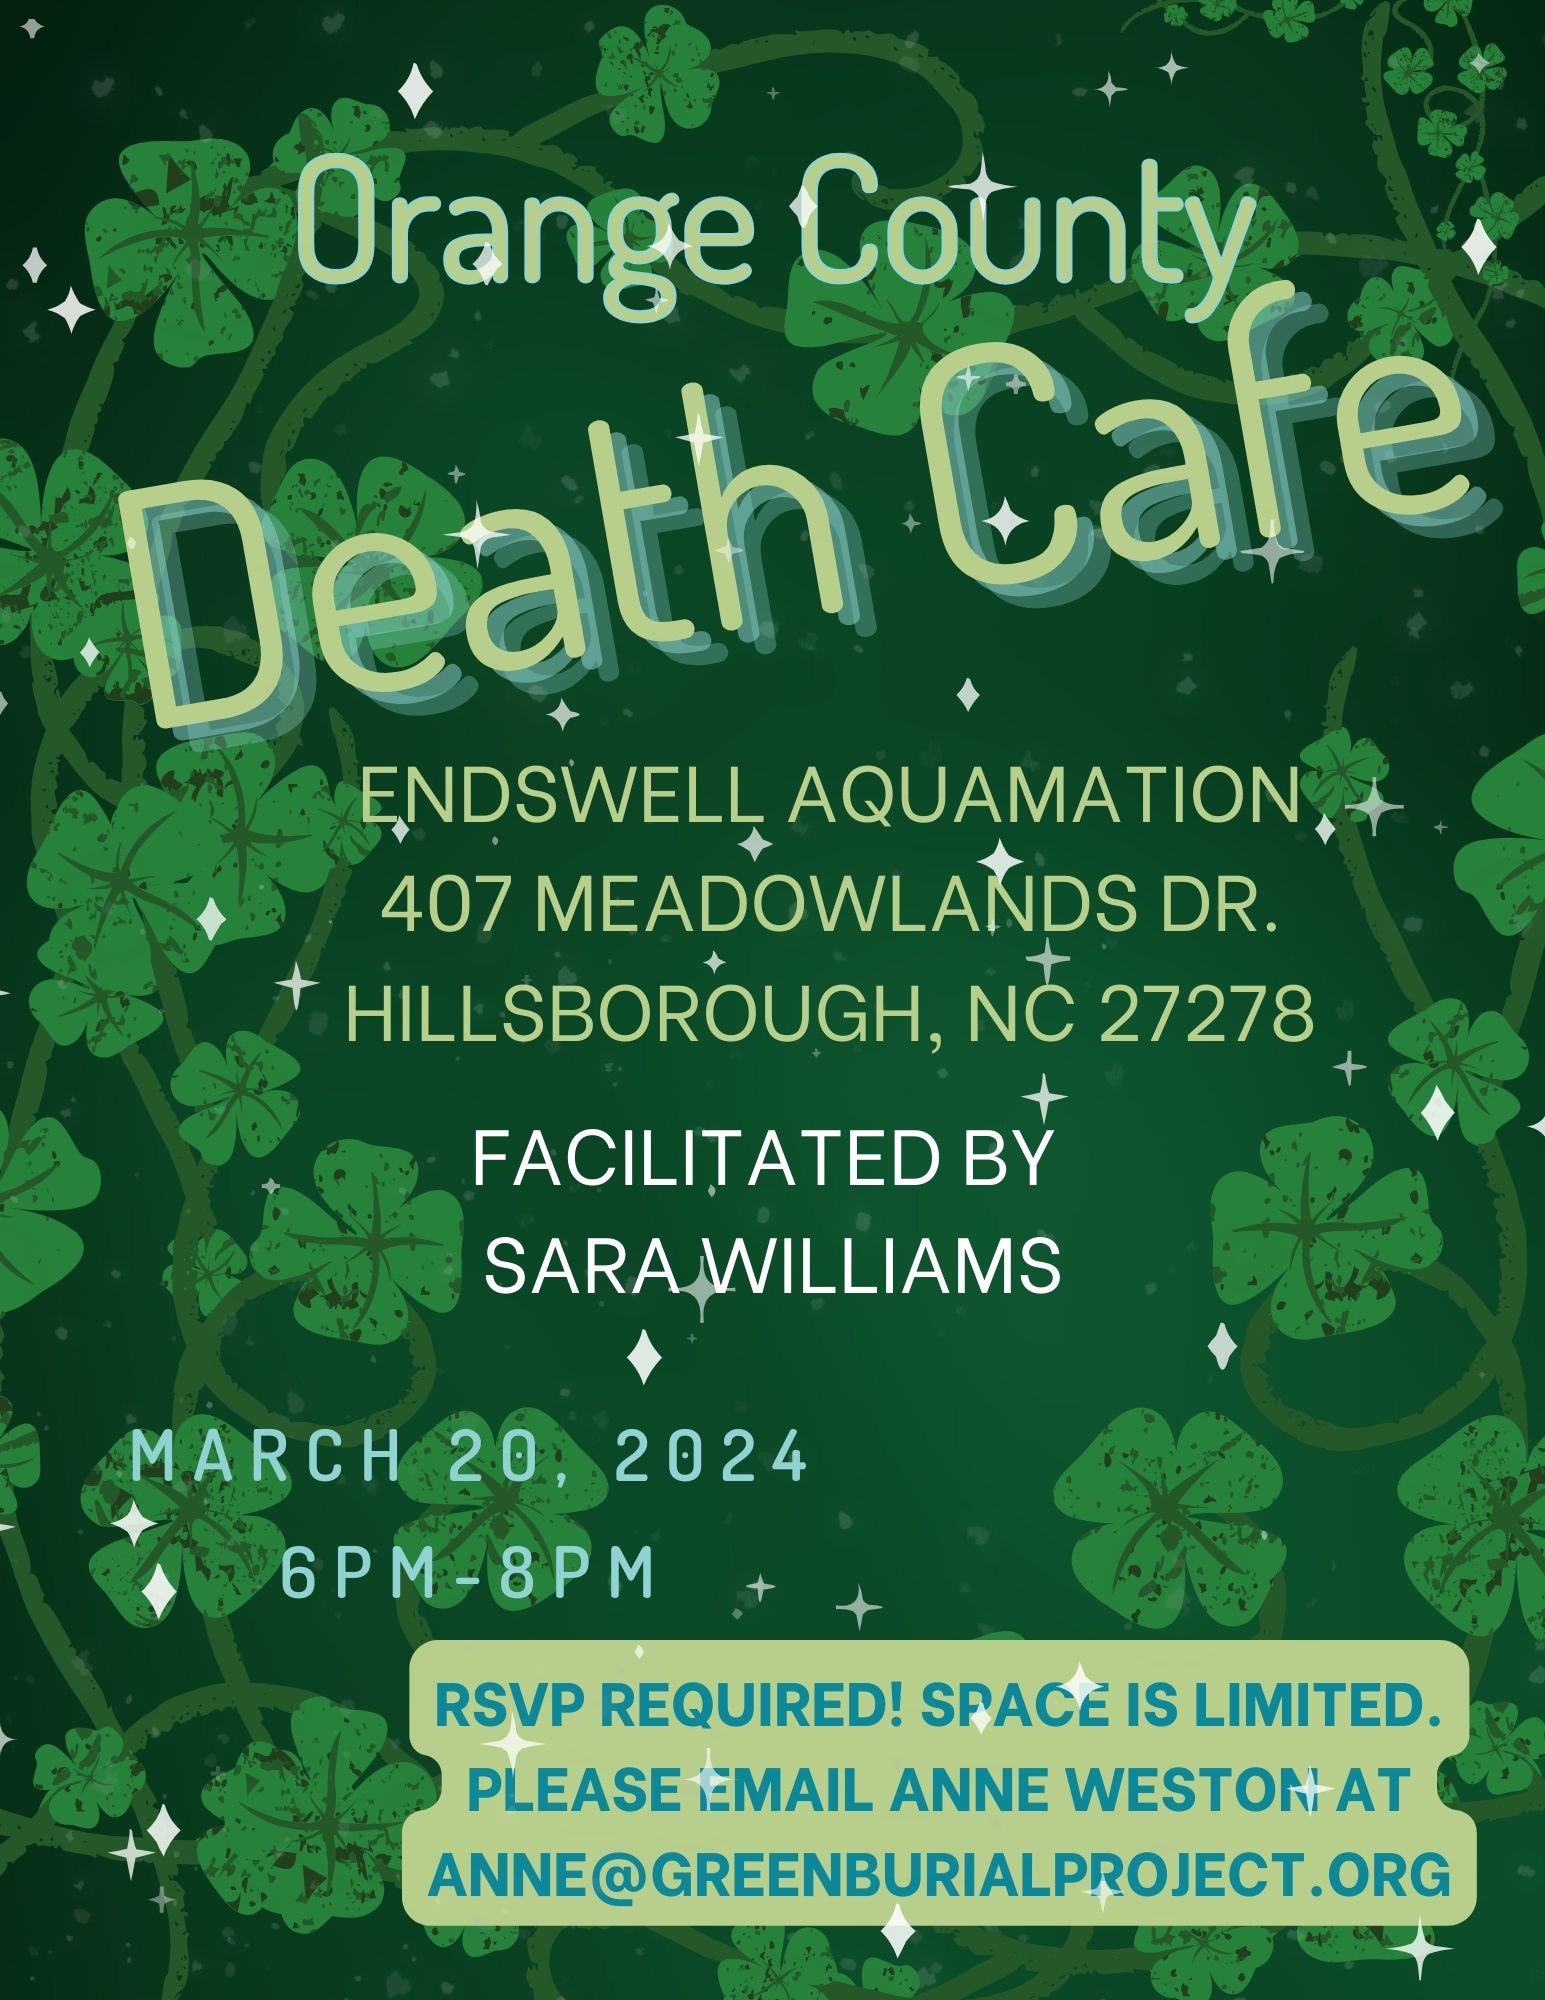 3/20/24: Orange County Death Cafe